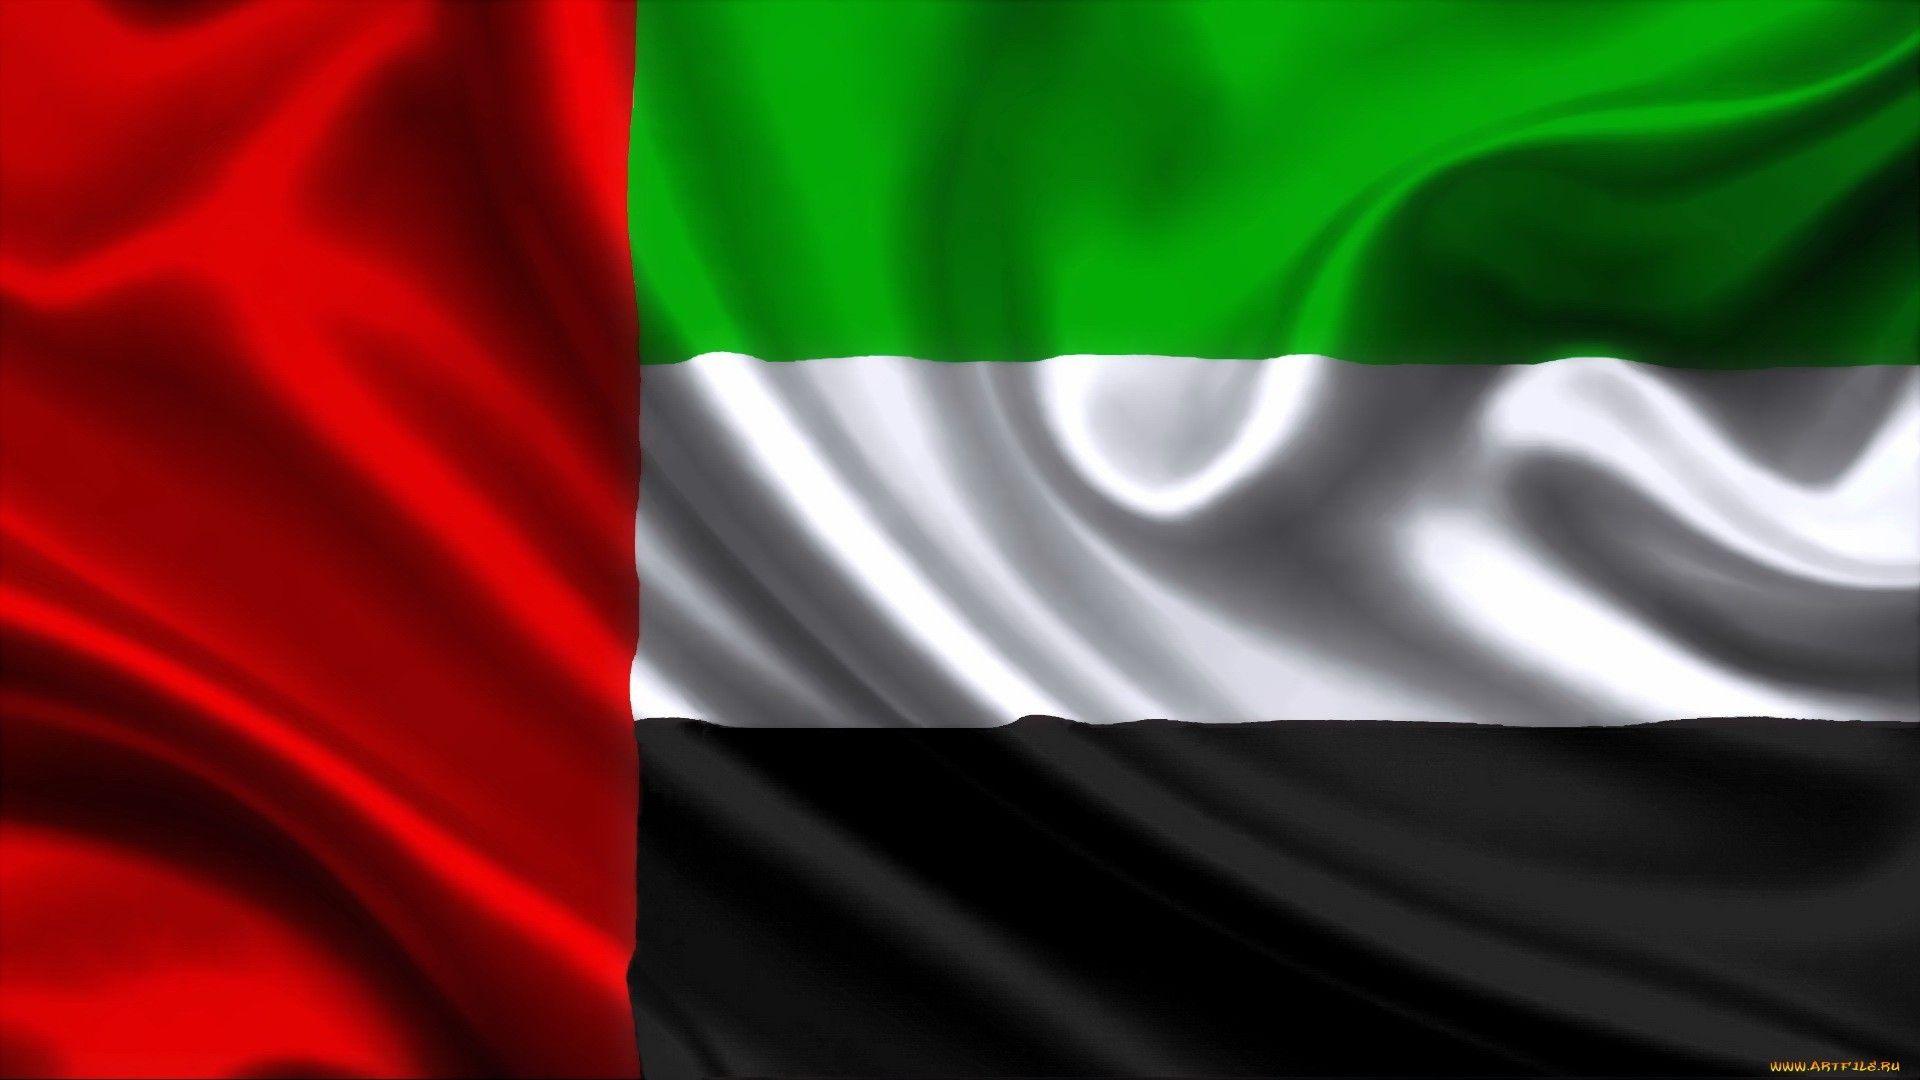 United Arab Emirates Flag wallpaper. Education